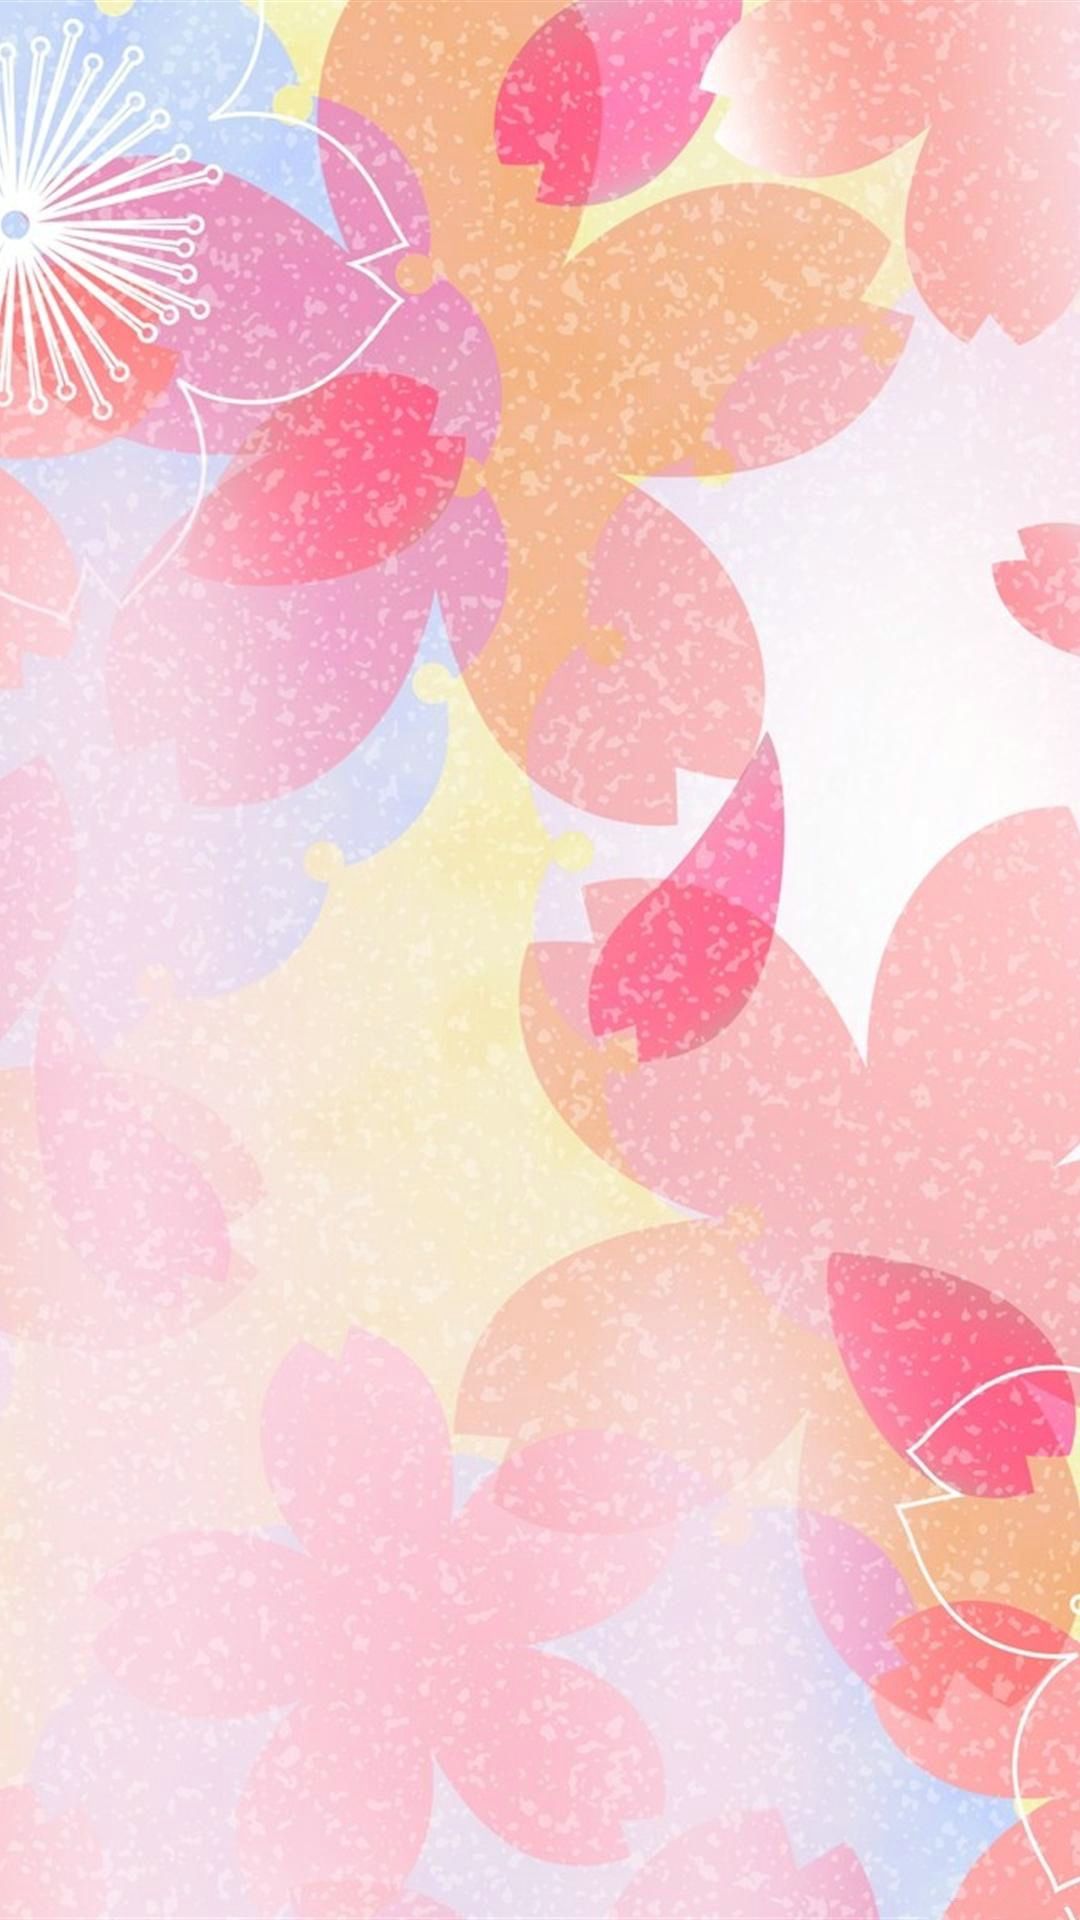 Cool Pink iPhone Wallpaper HD